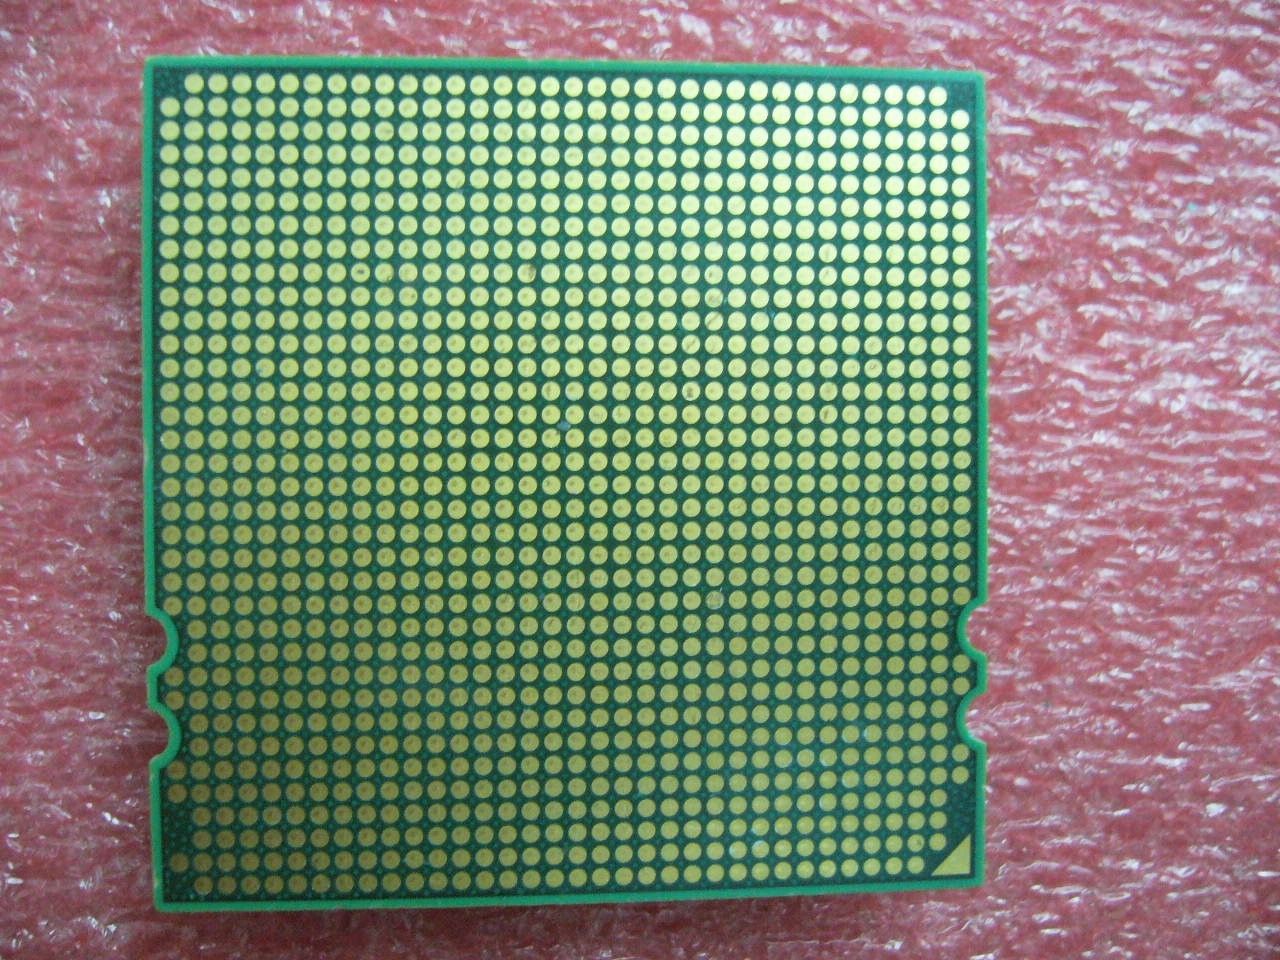 QTY 1x AMD Opteron 2374 HE 2.2 GHz Quad-Core OS2374PAL4DGI CPU Socket F 1207 - zum Schließen ins Bild klicken